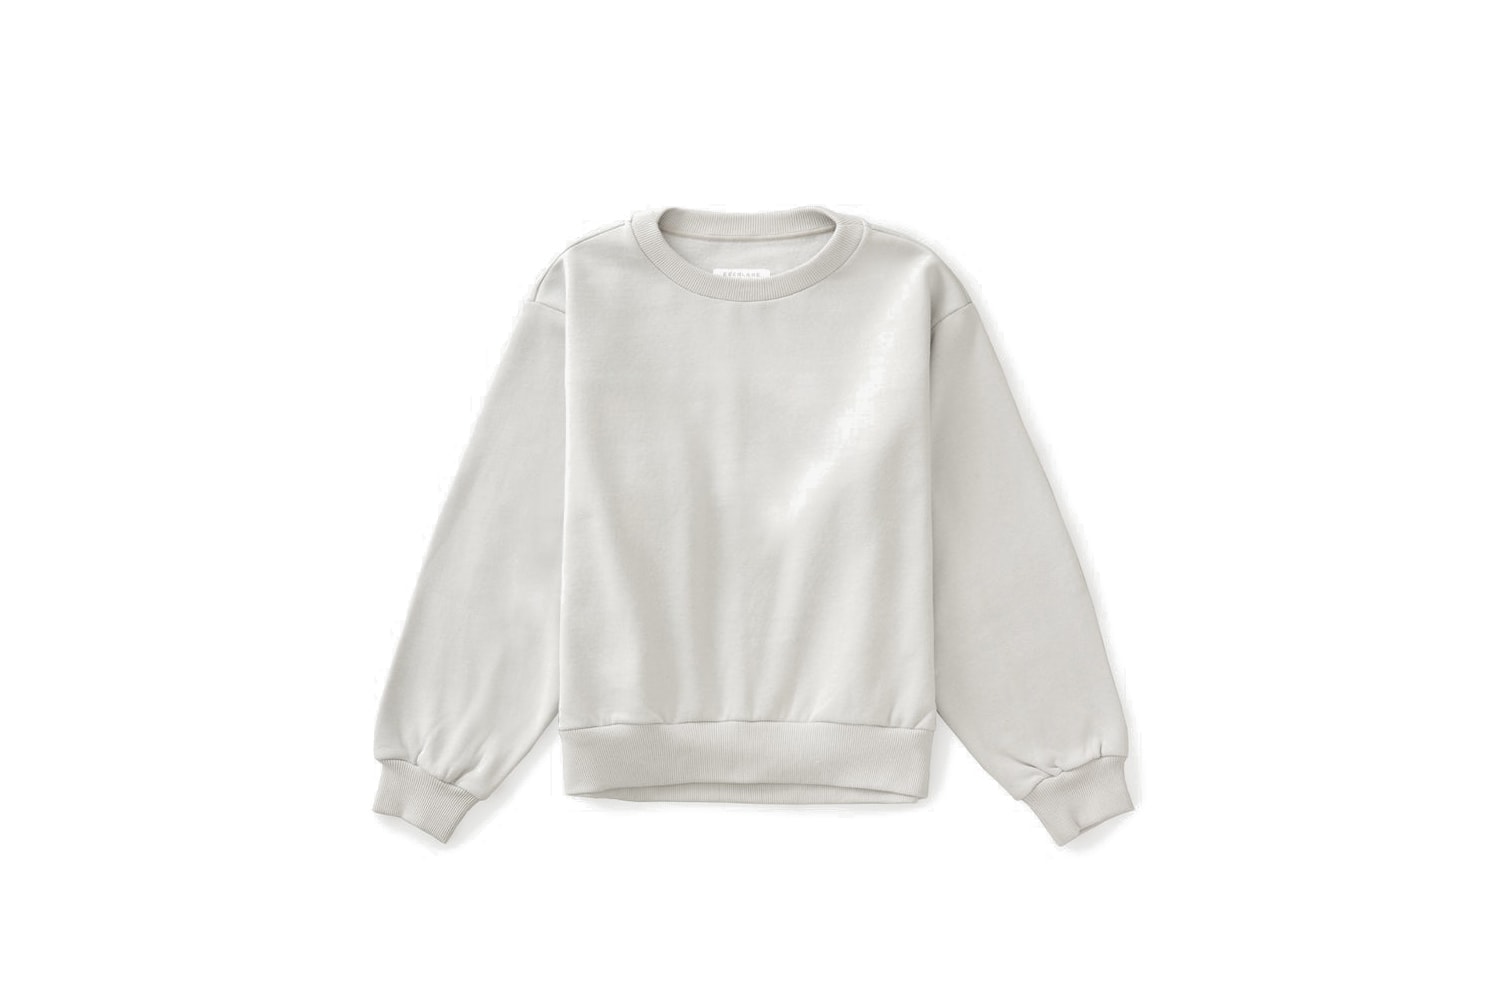 Everlane Oversize Sweater Fleece Crewneck Sweatshirt White Grey Blue Black Basic Staple Pieces Cozy